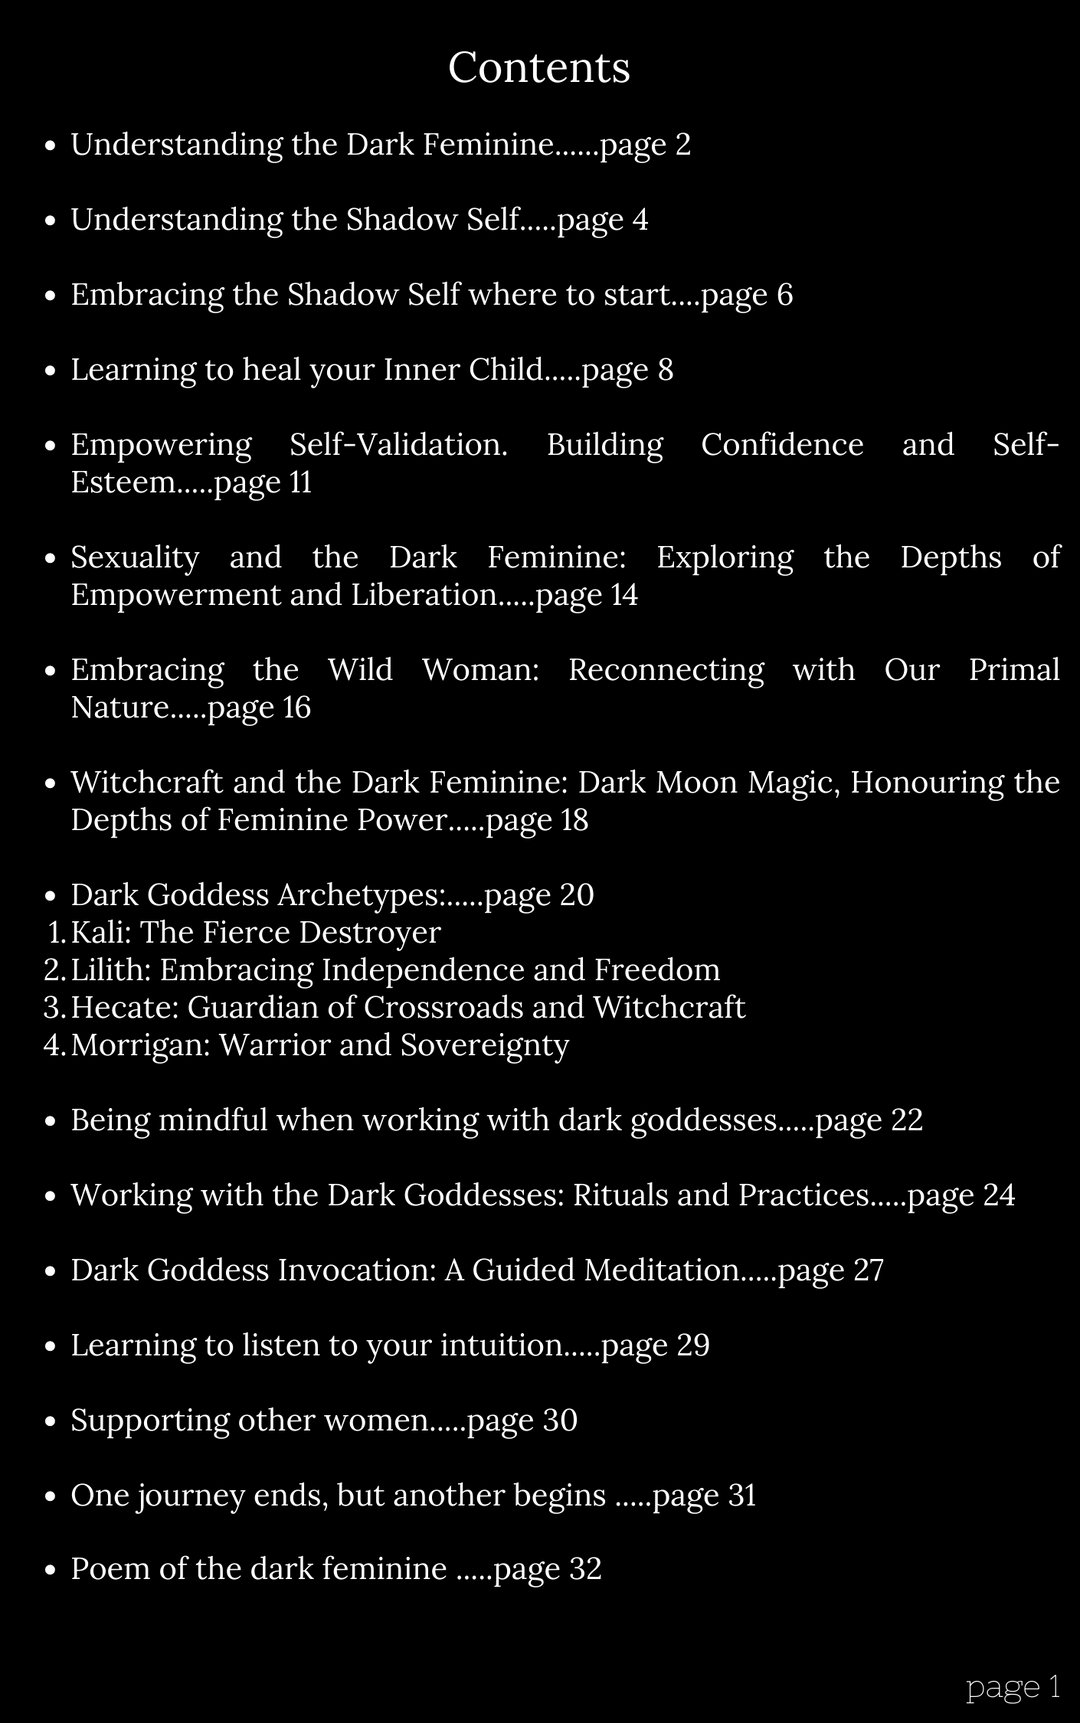 dark femininity e-book